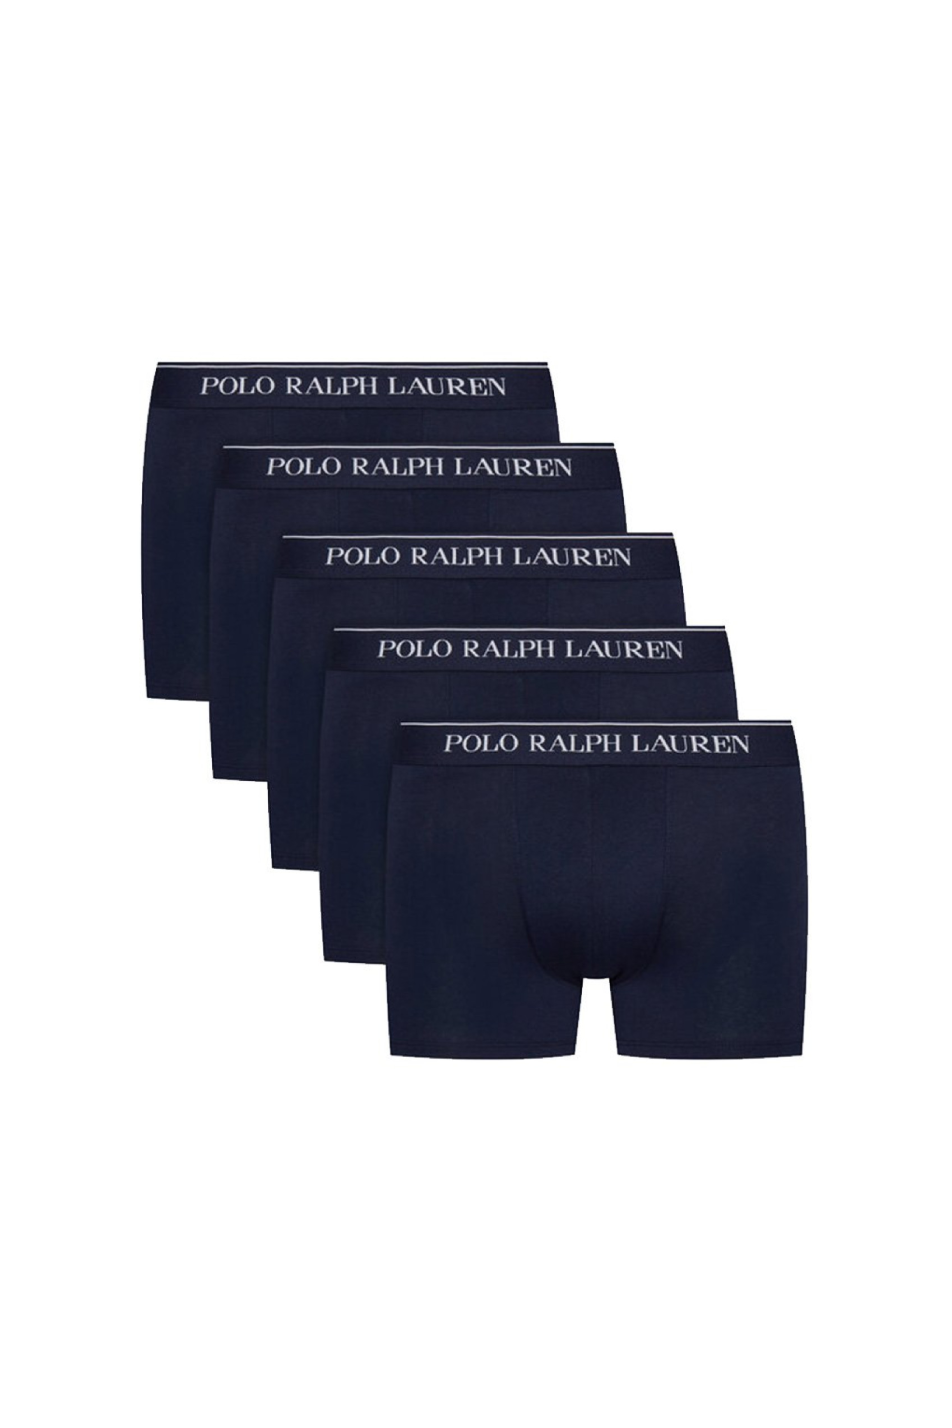 Polo Ralph Lauren 5 Pack Men's Trunk